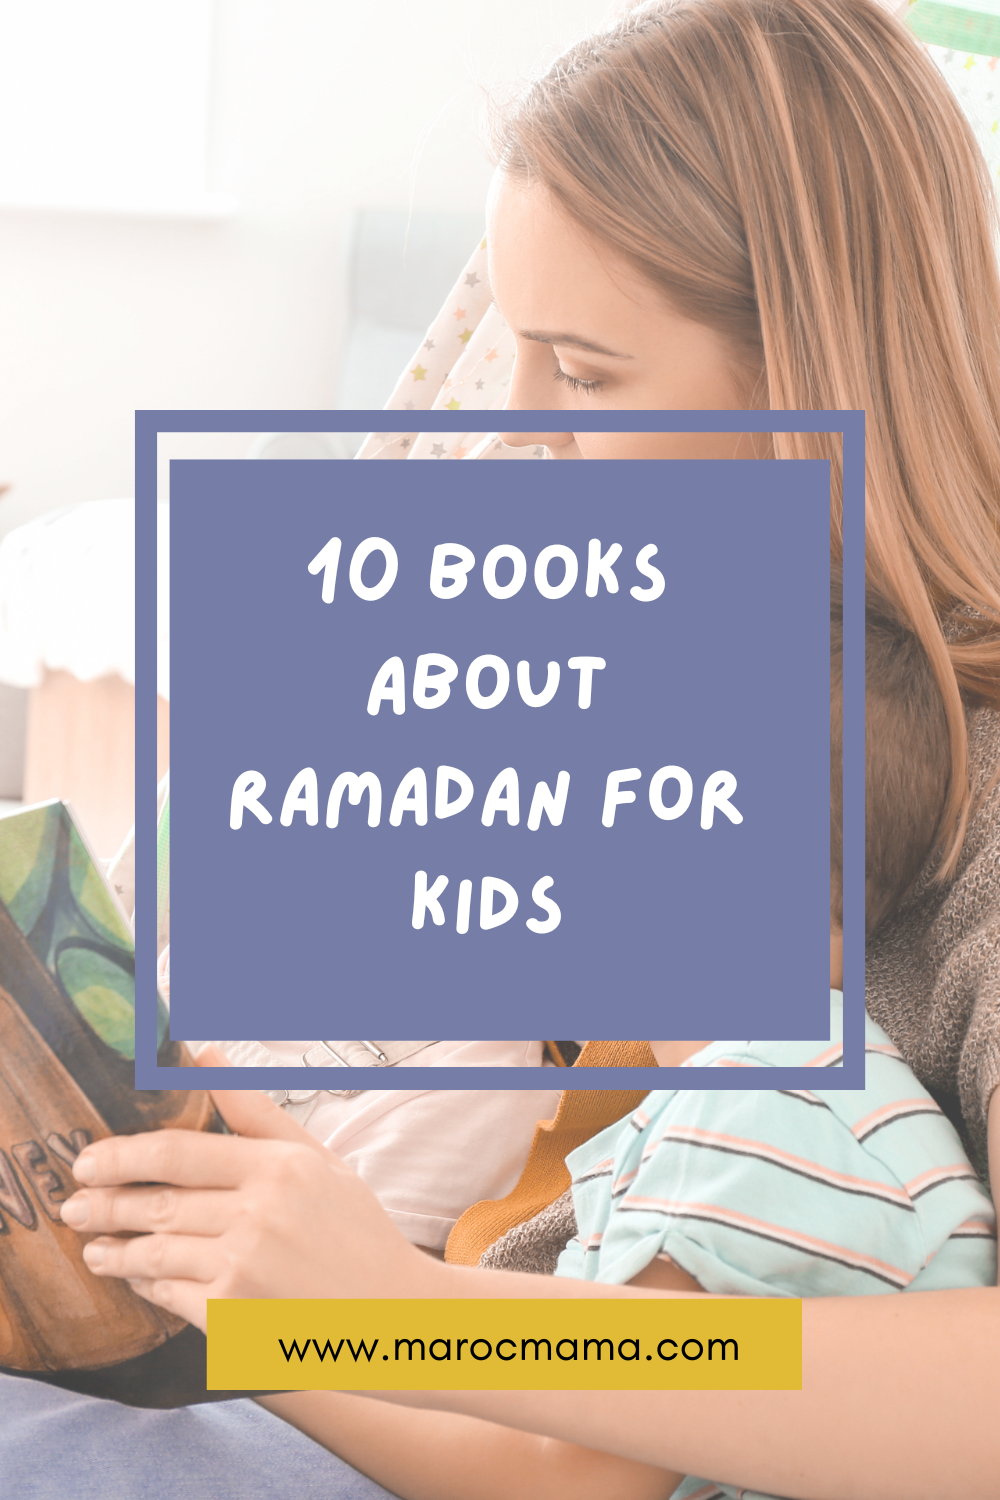 Mom reading Ramadan books to two kids